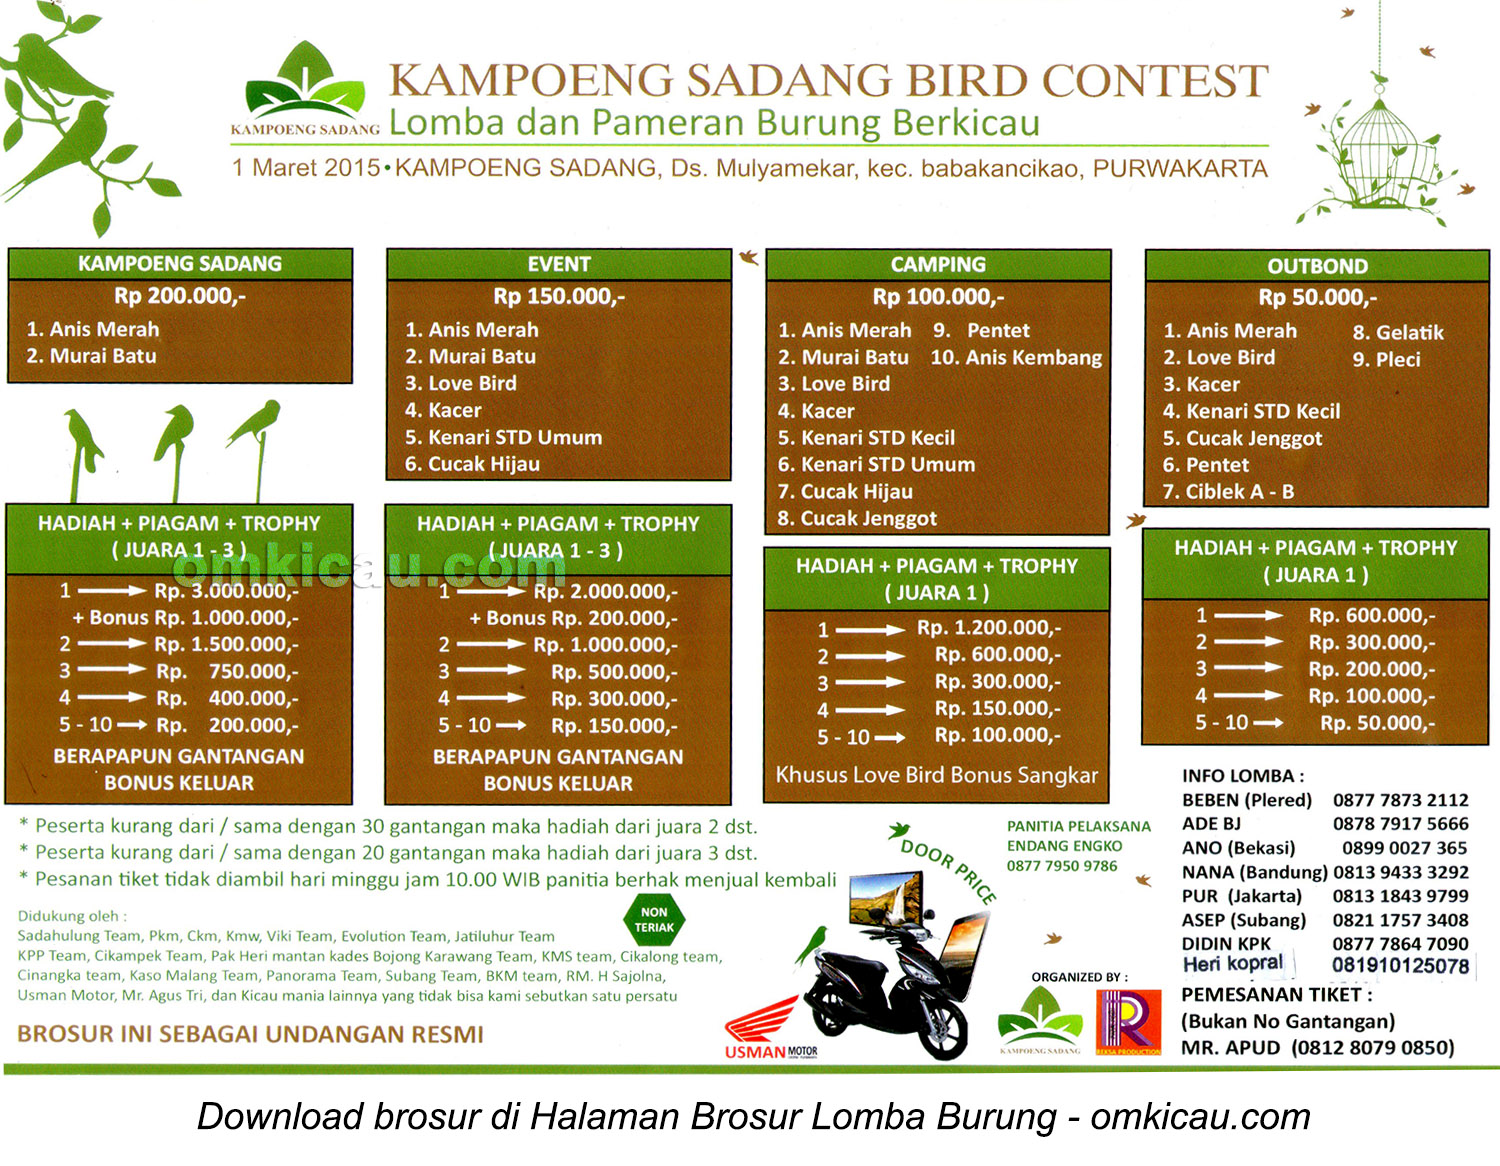 Brosur Lomba Kampung Sadang Bird Contest, Purwakarta, 1 Maret 2015